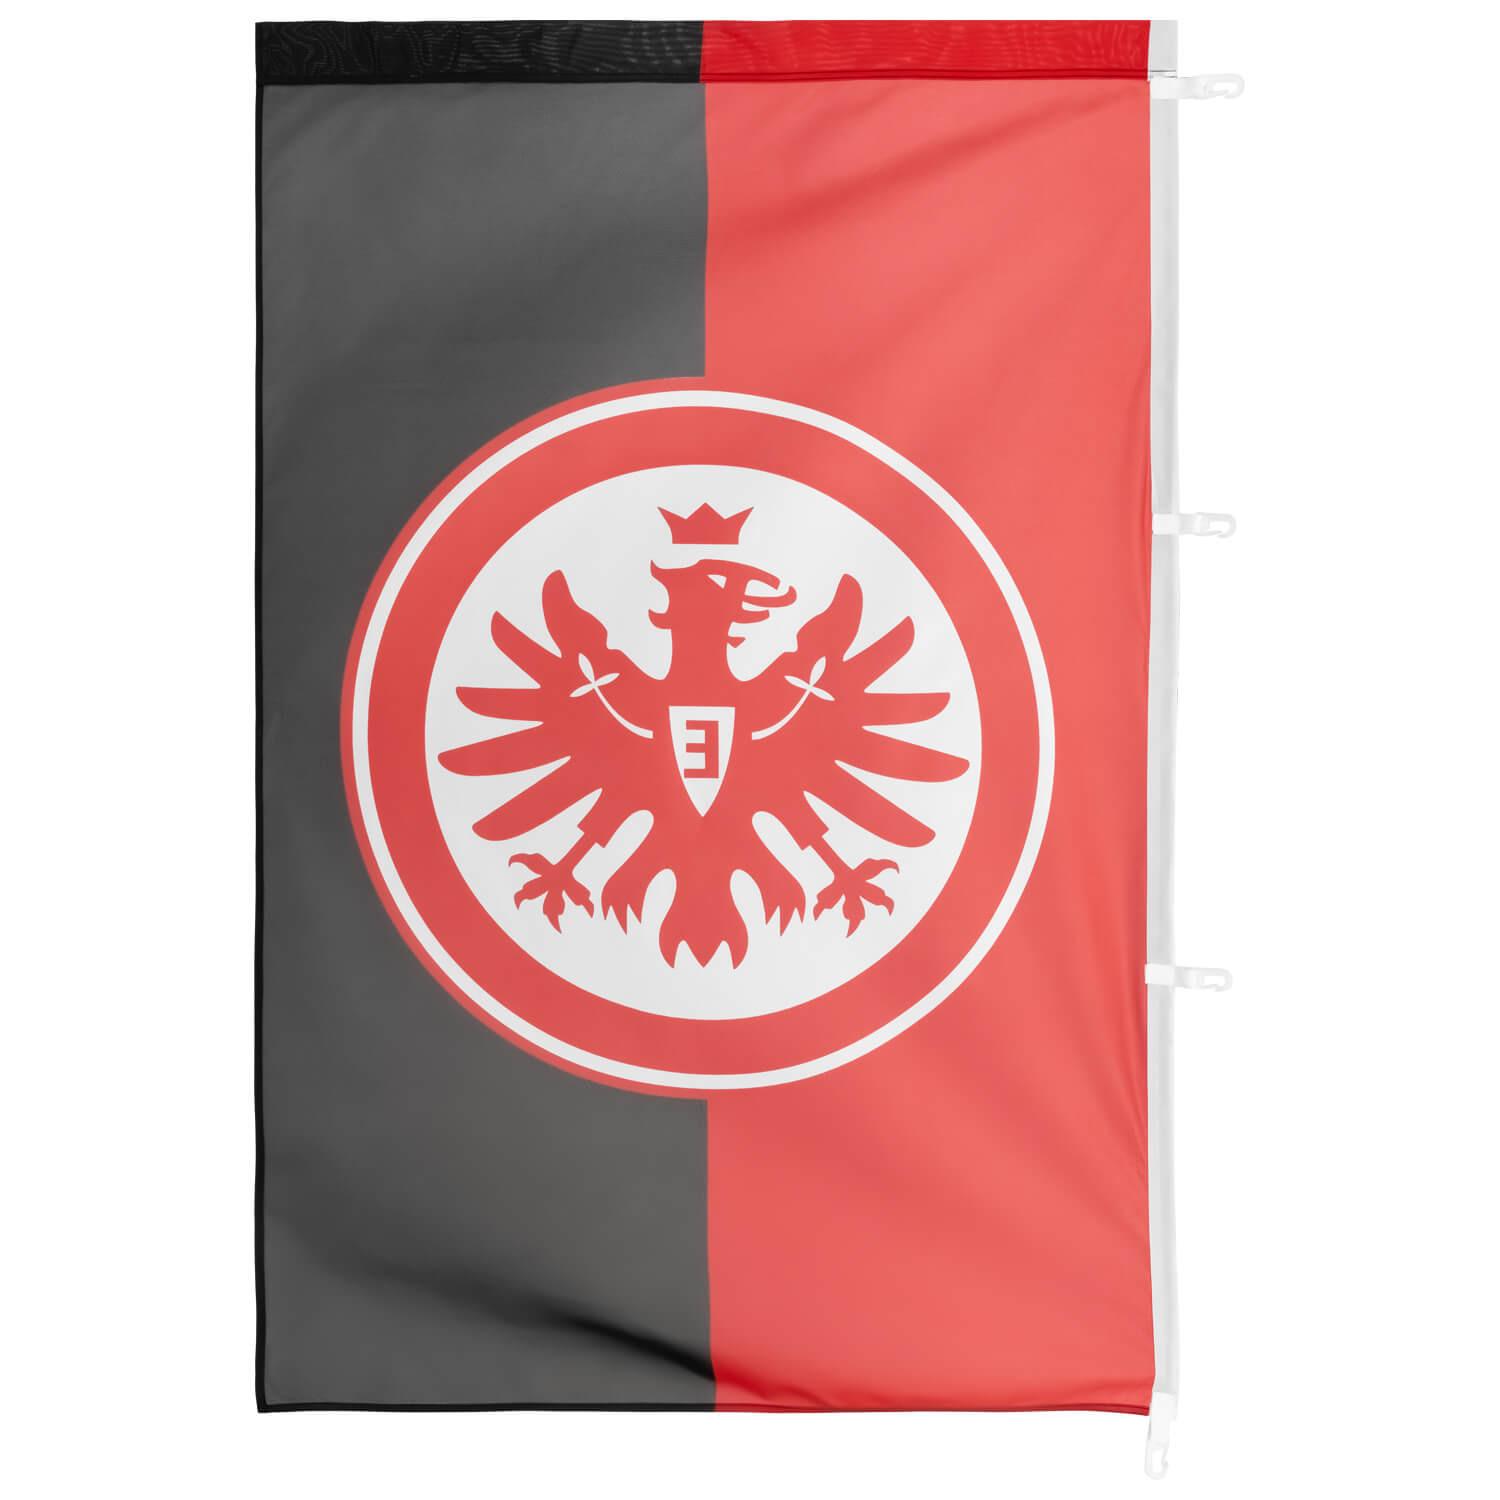 Eintracht Frankfurt 90 cm  x 150 cm Ösen Flagge Fahne NEU ! 